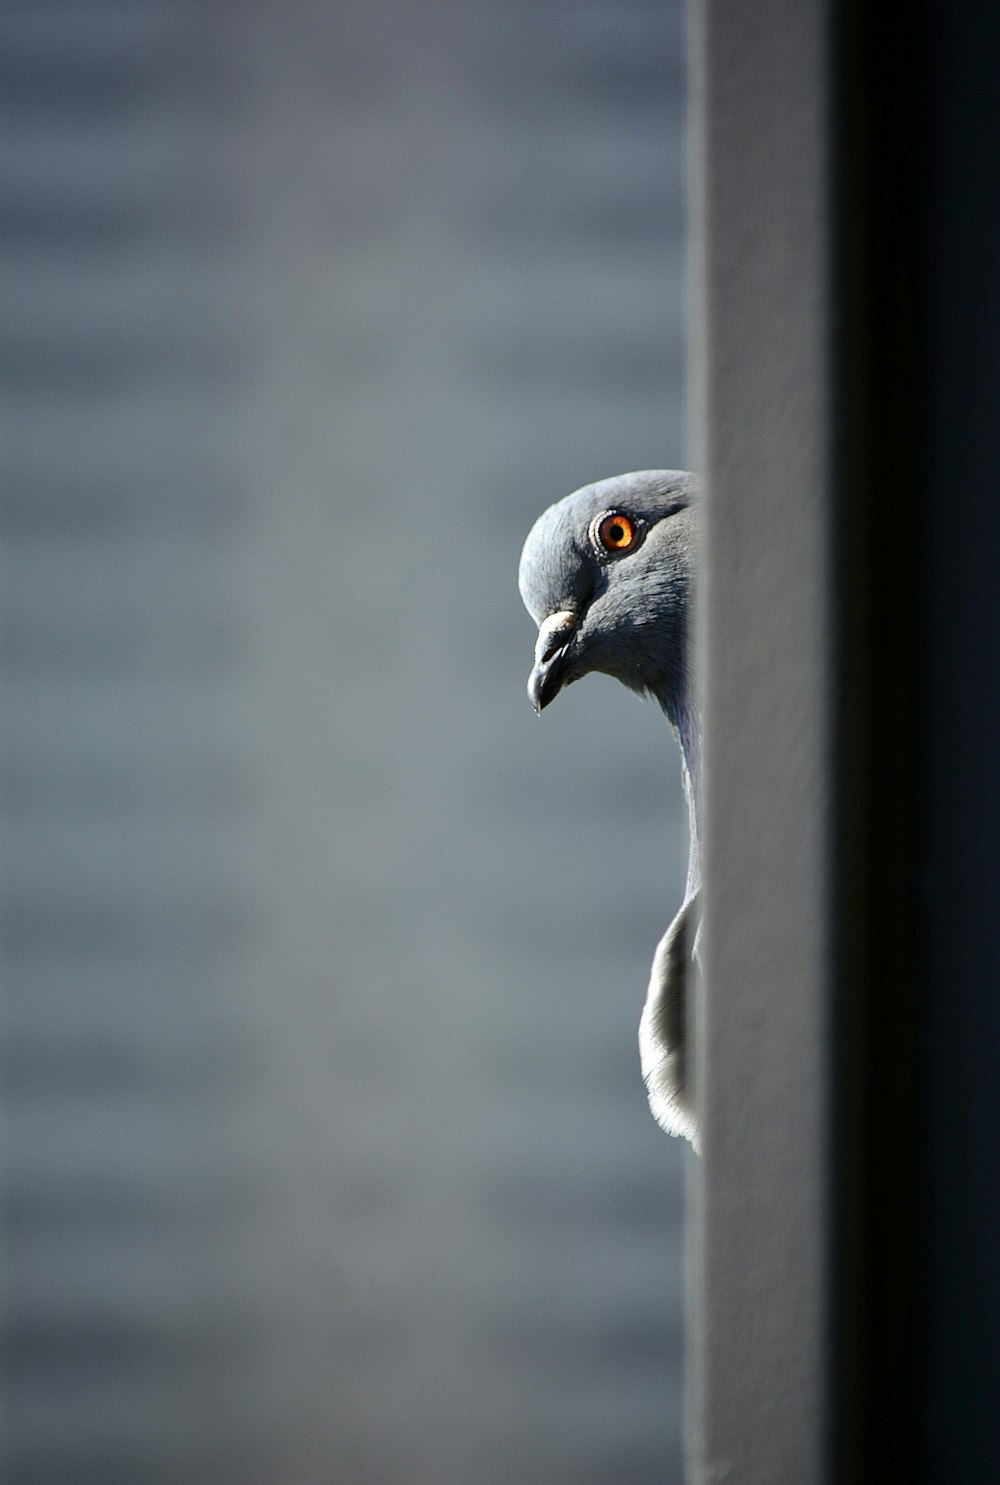 gray and white bird on gray metal bar